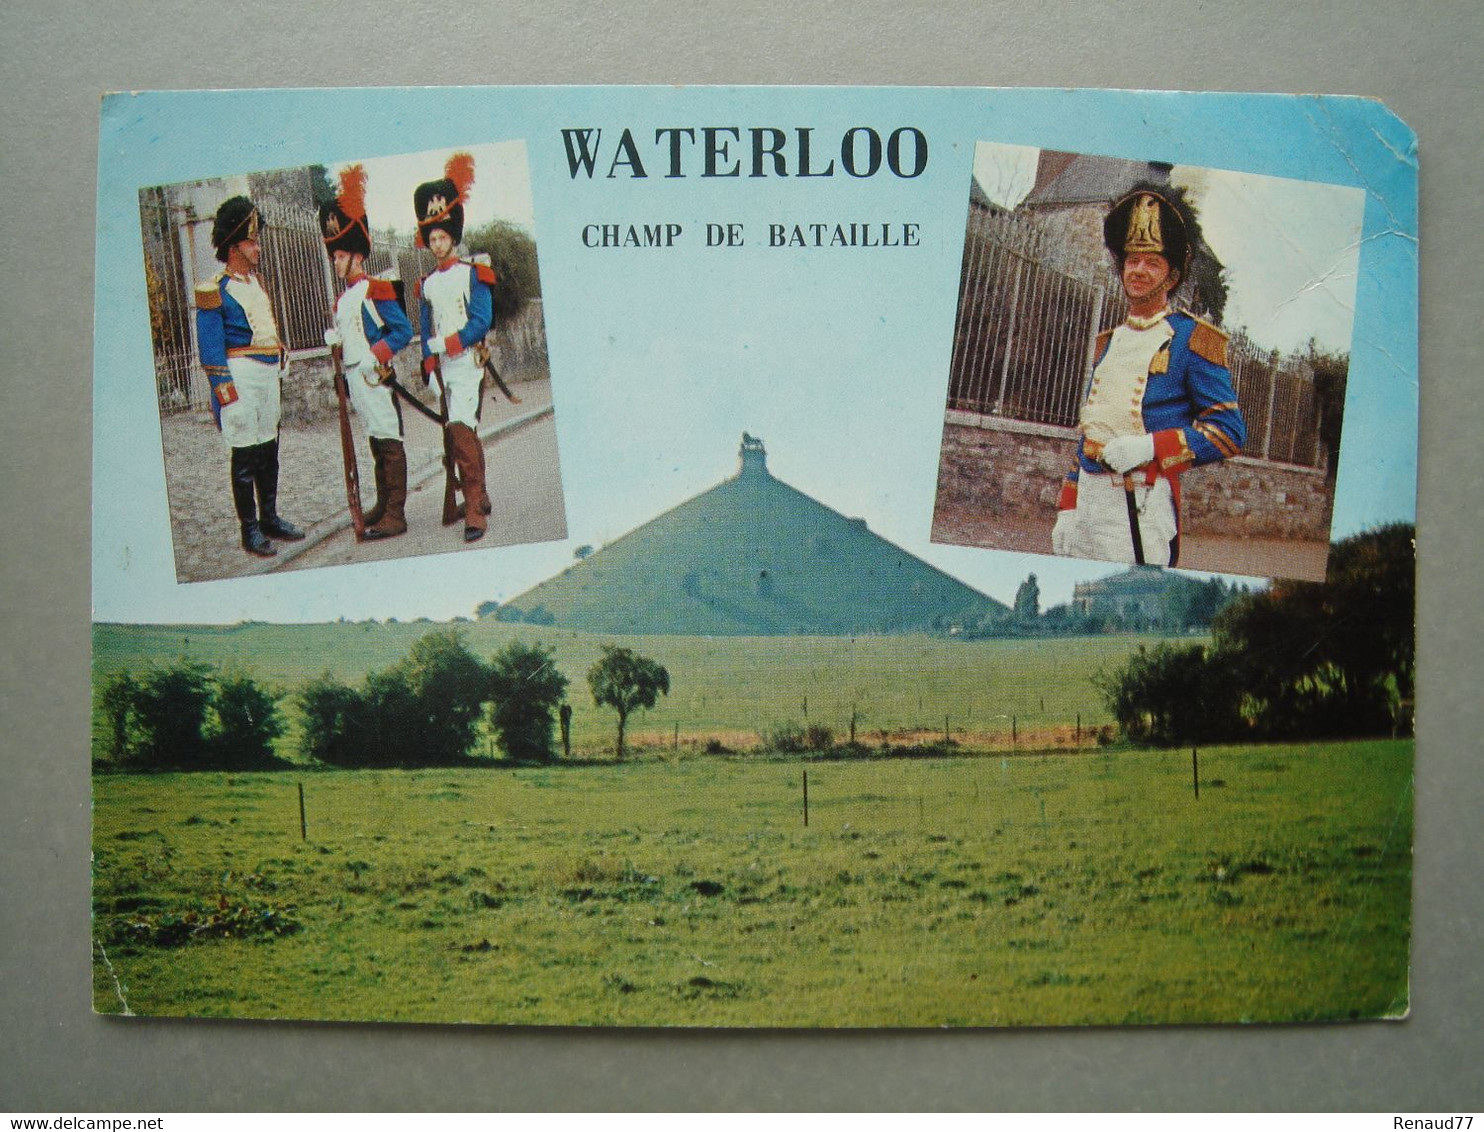 Waterloo - Champ De Battaille - Waterloo